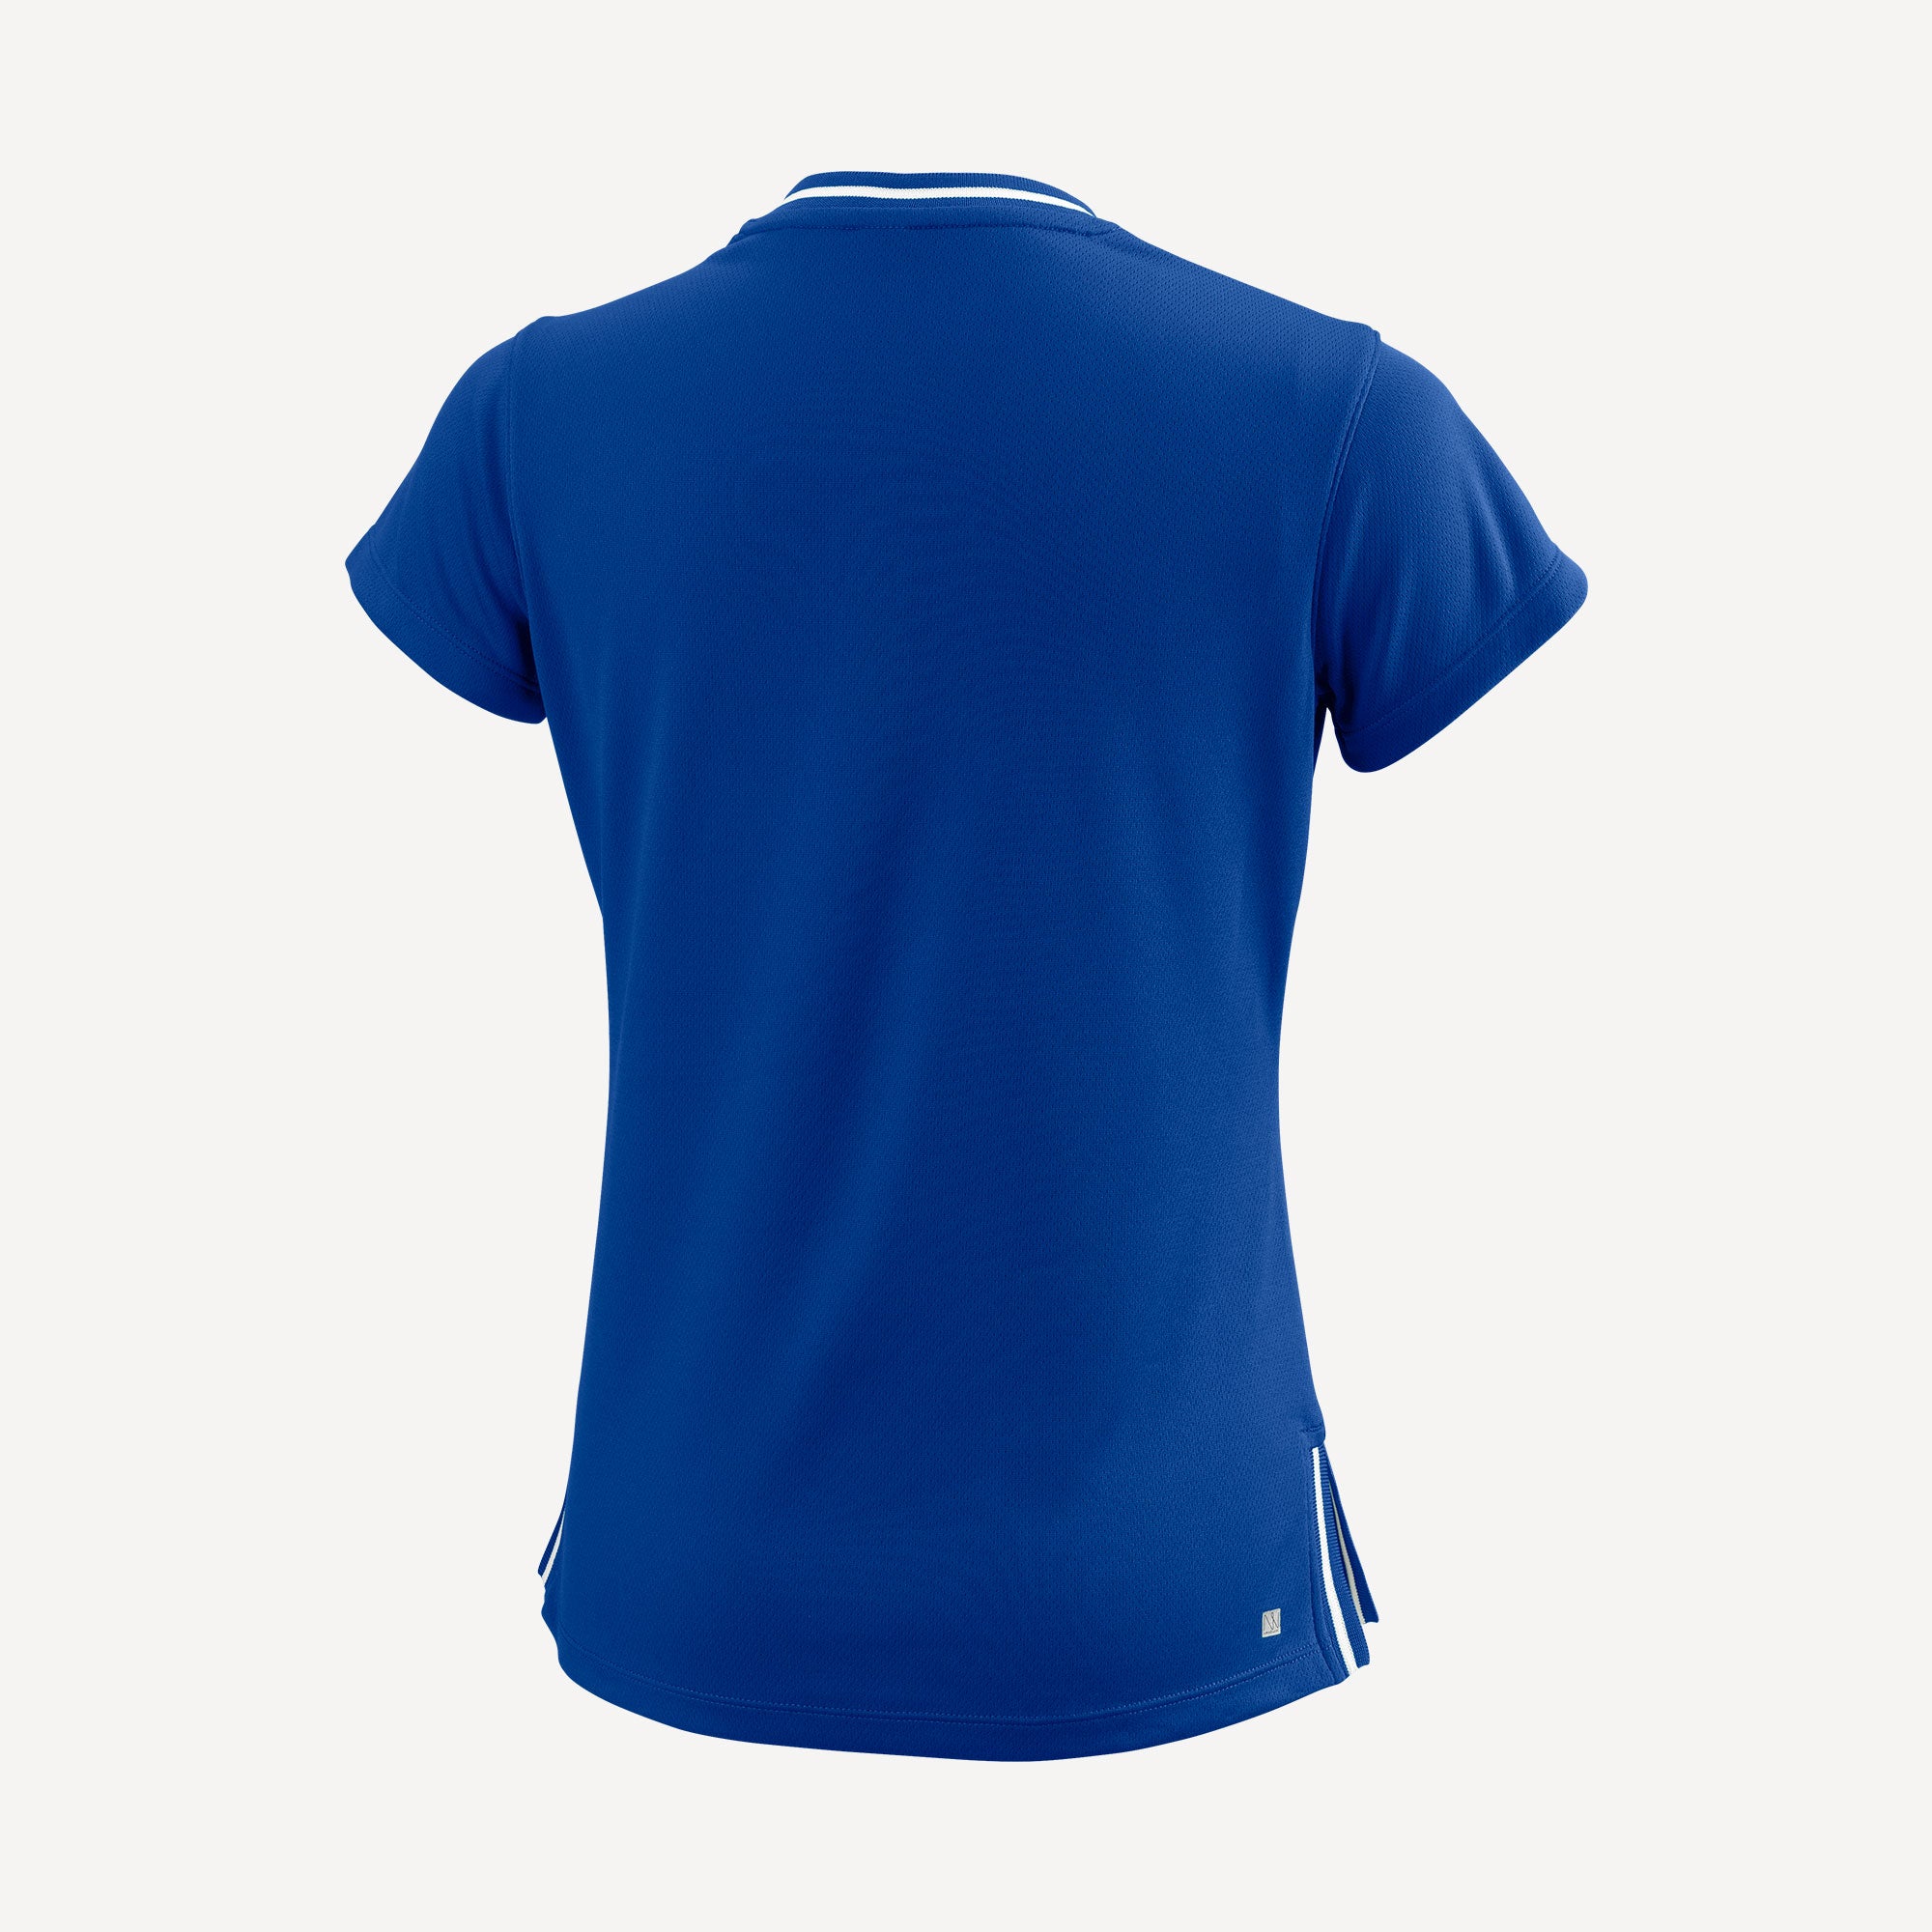 Wilson Team 2 Girls' V-Neck Tennis Shirt Blue (2)